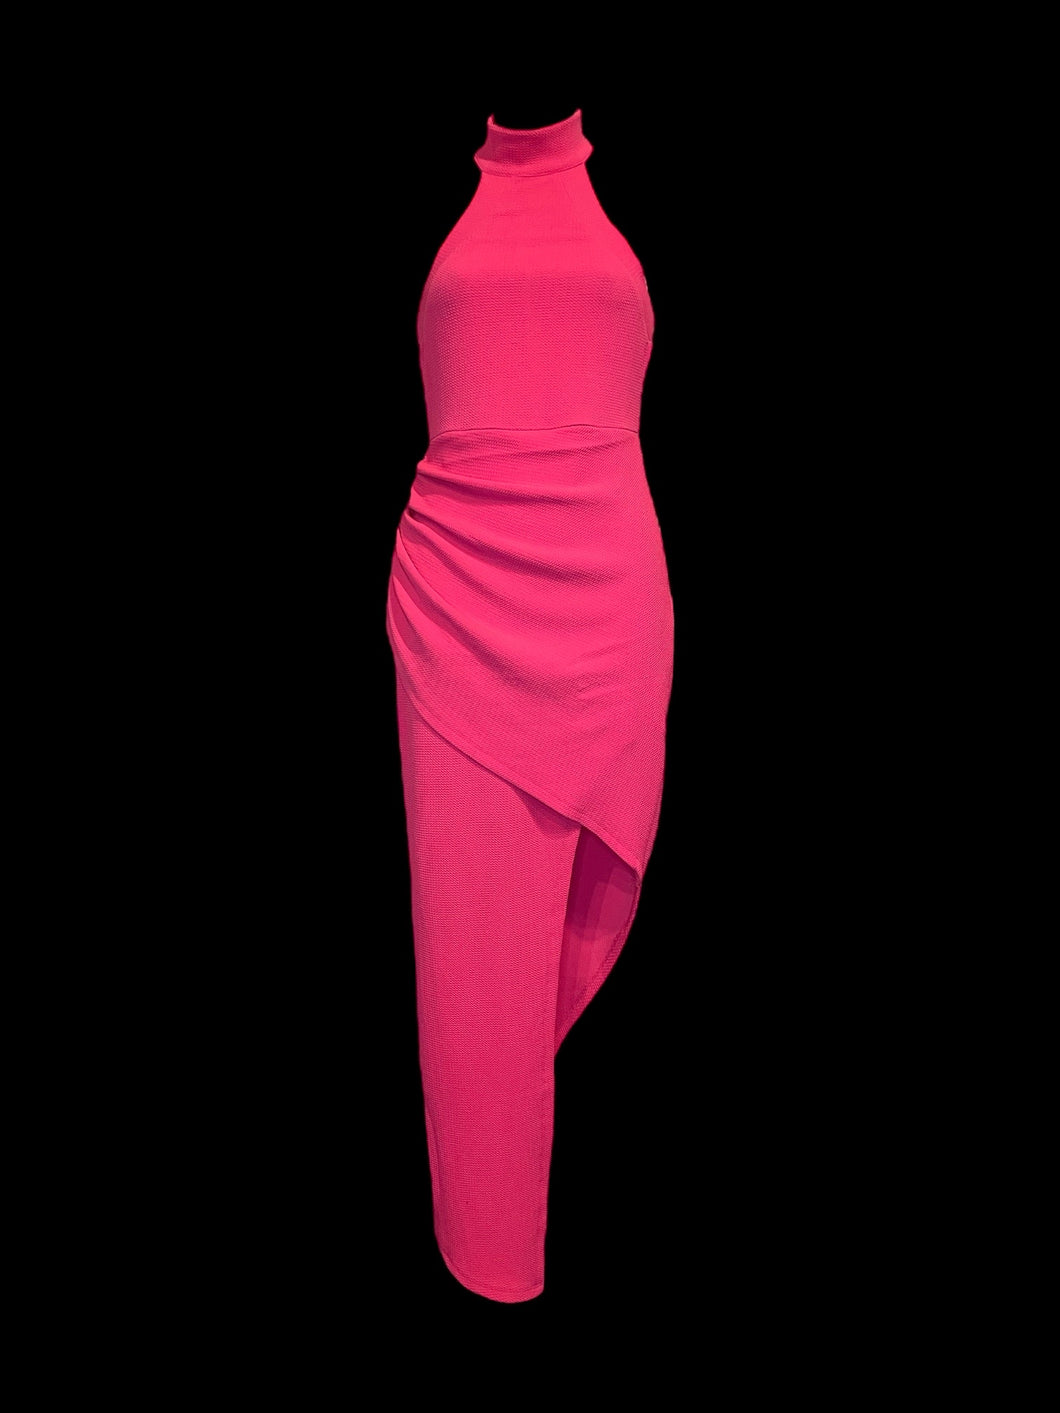 XXS Hot pink sleeveless high neckline mock wrap skirt bodycon dress w/ asymmetric hem, textured fabric, & zipper closure